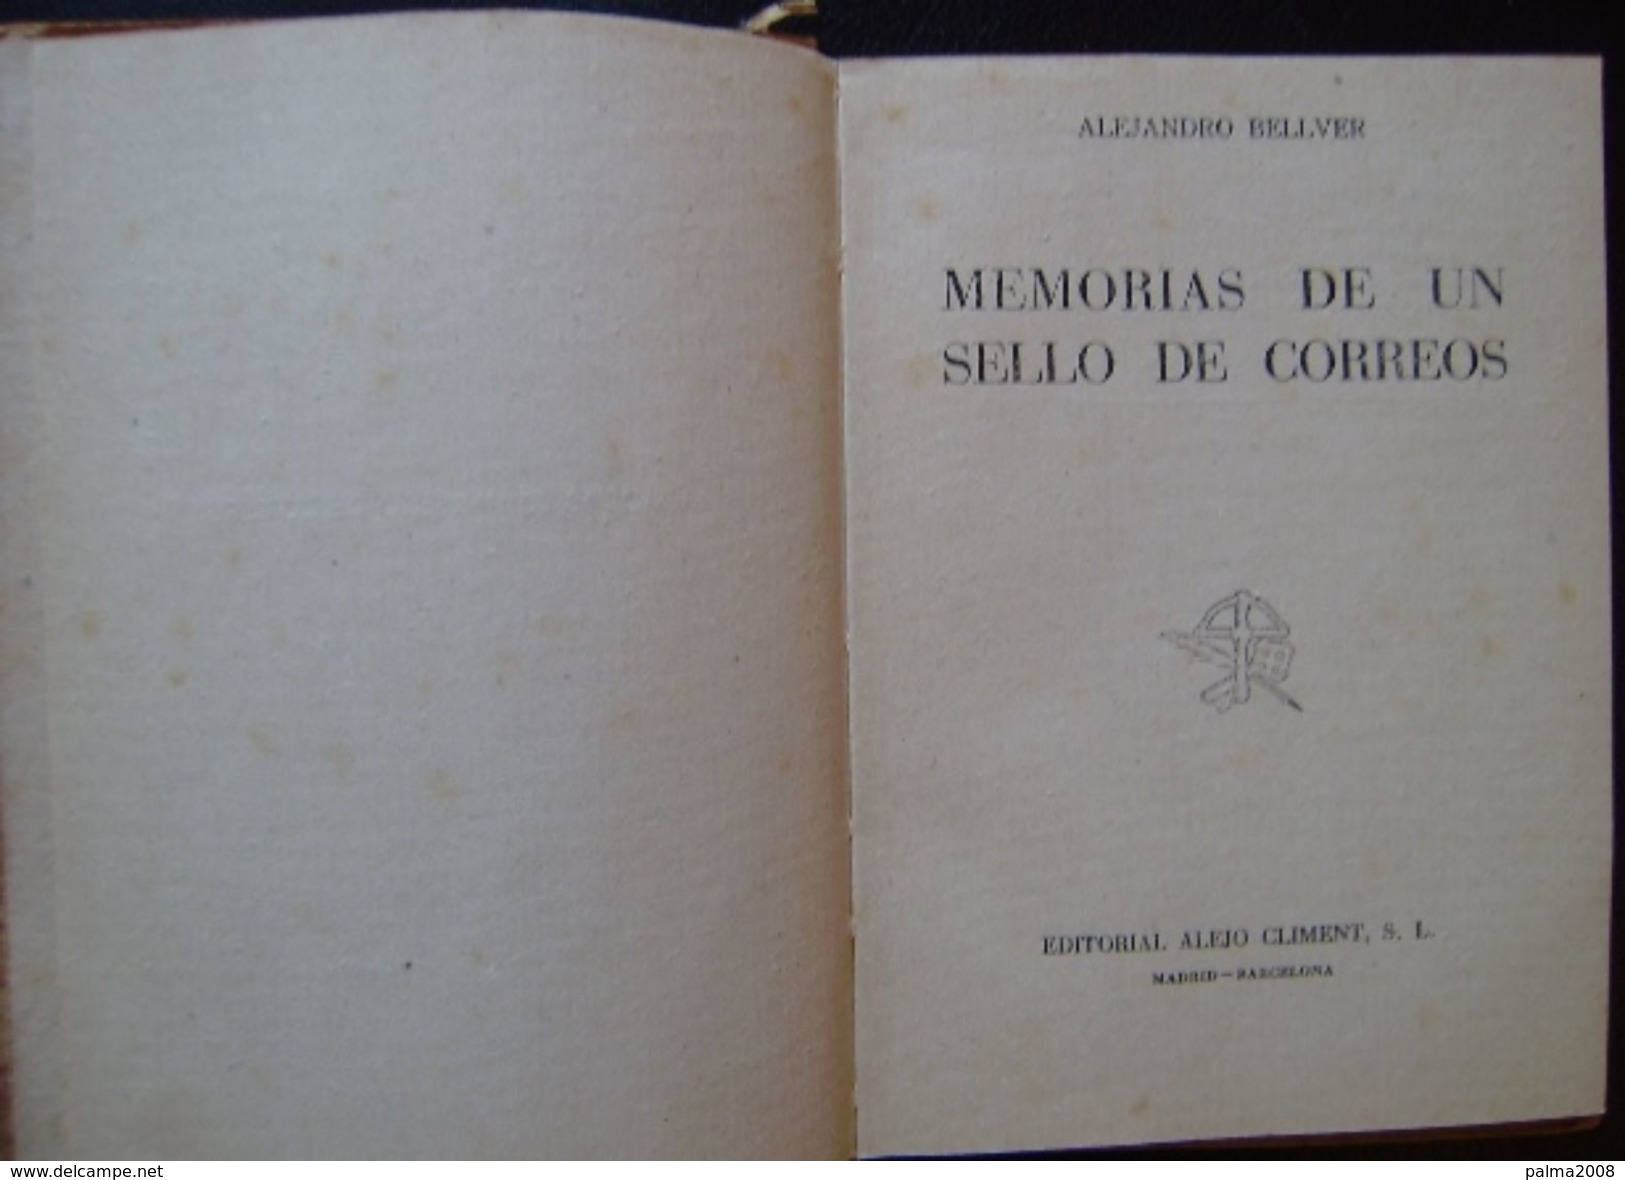 PEQUEÑO LIBRO DE LAS - MEMORIAS DE UN SELLO DE CORREOS - VER FOTOS INTERIORES - Filatelia E Historia De Correos